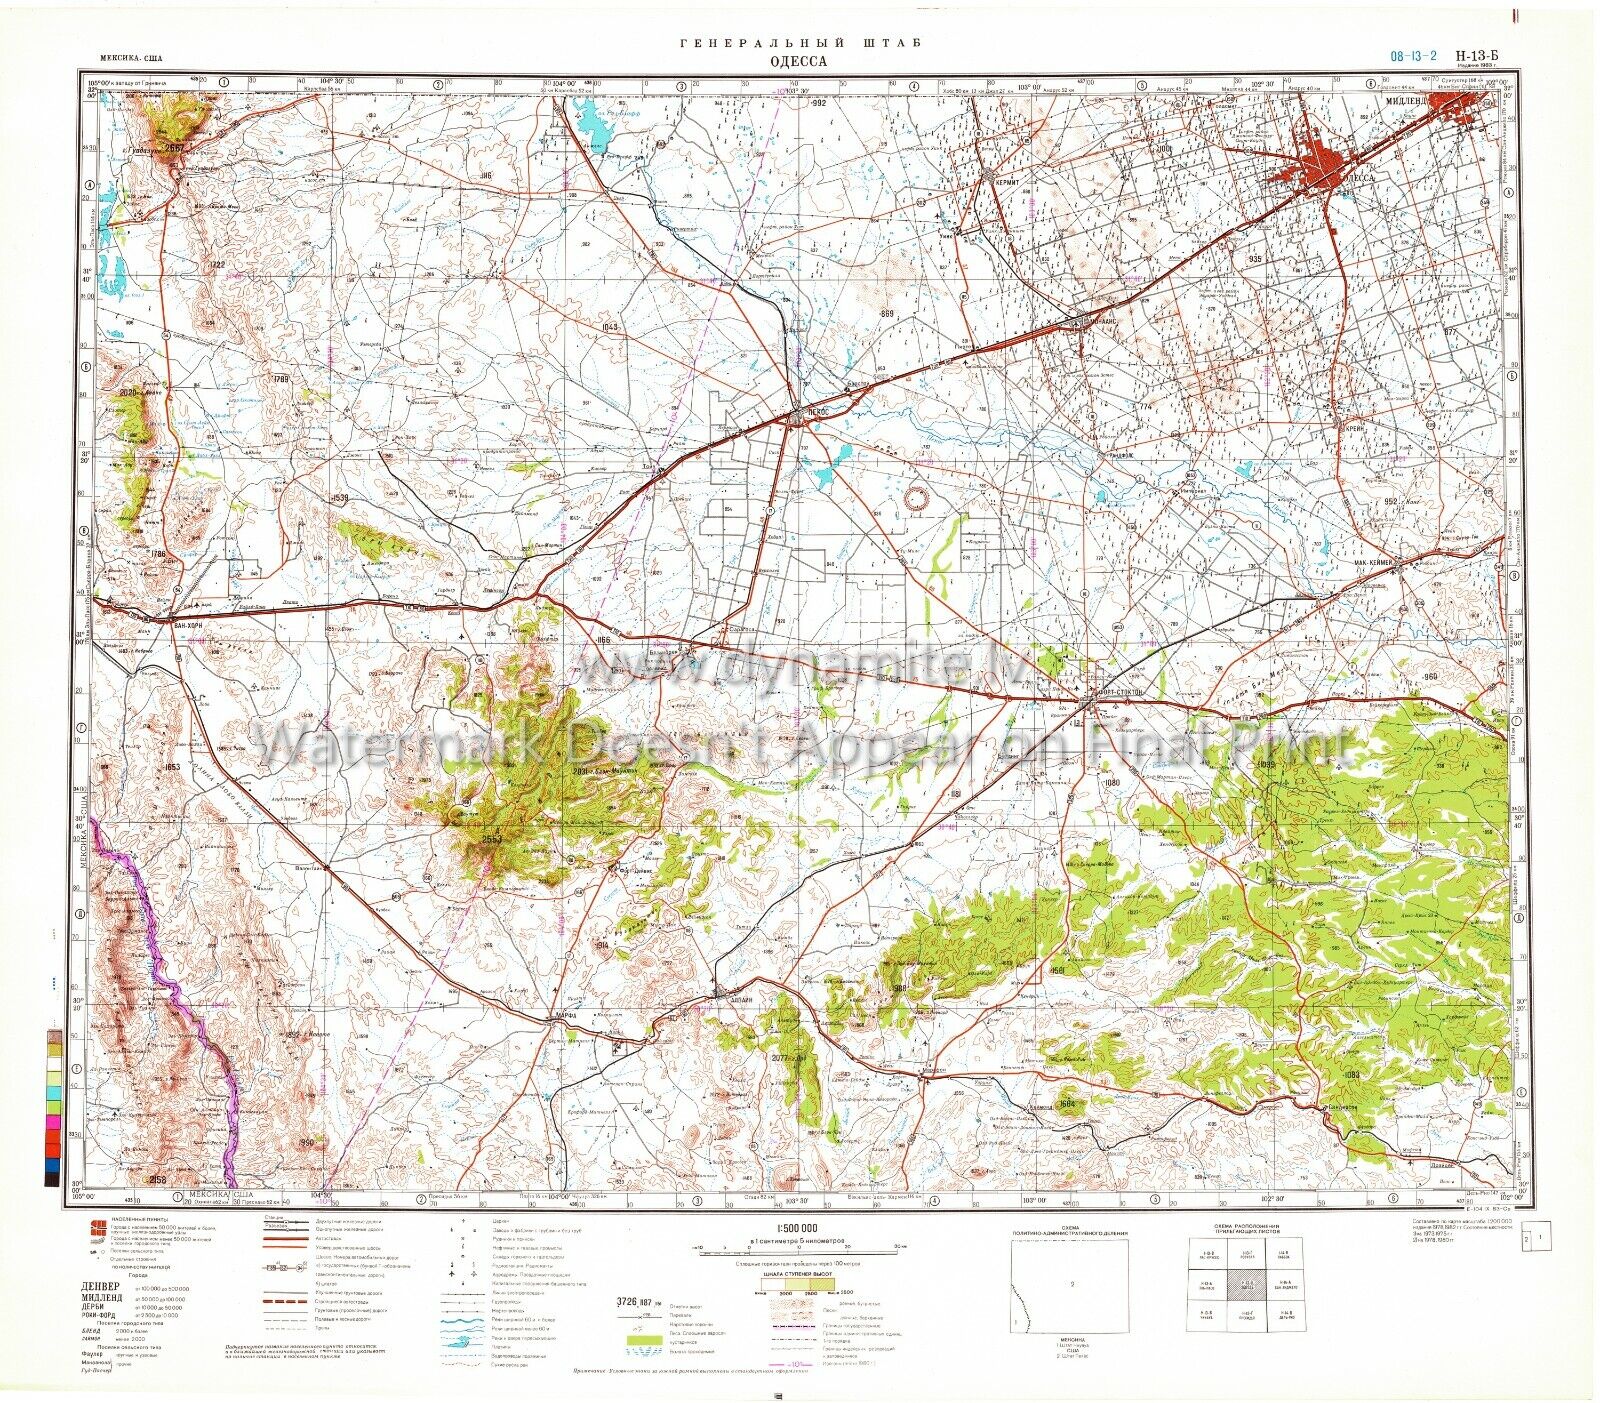 Soviet Russian Topographic Map ODESSA, TEXAS USA 1:500K Ed.1983 REPRINT